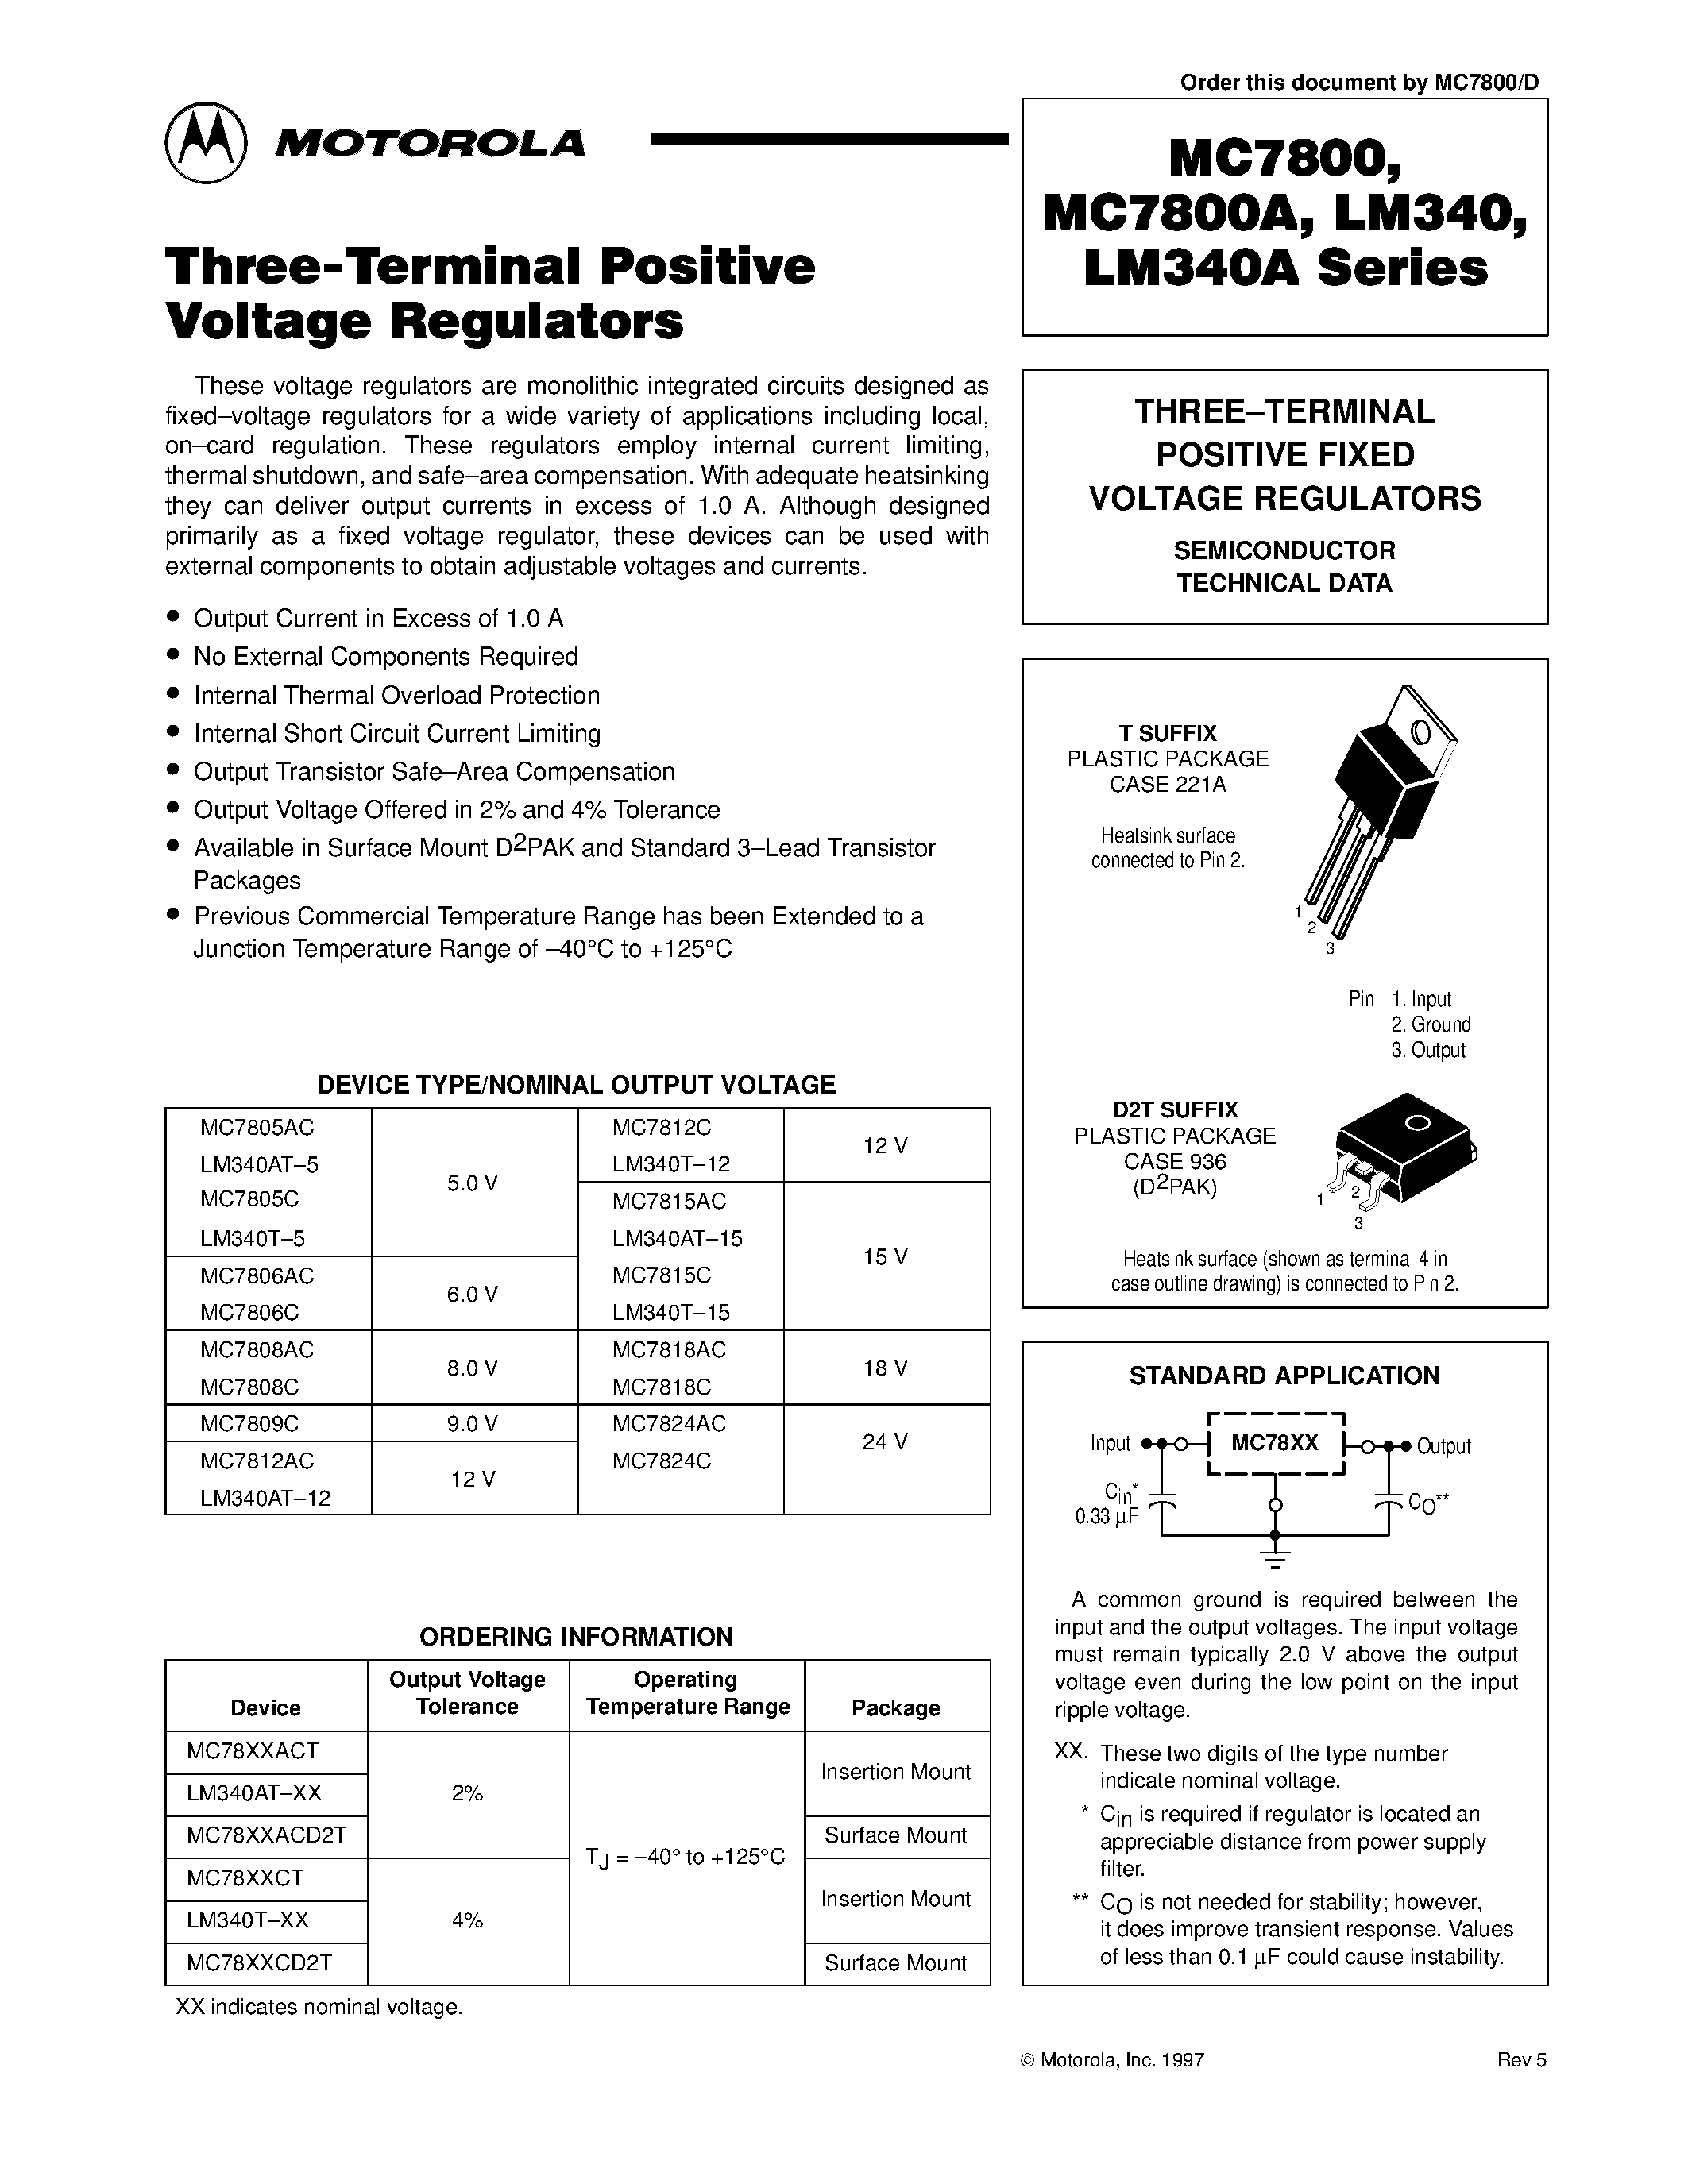 Datasheet MC7808C - THREE TERMINAL POSITIVE FIXED VOLTAGE REGULATORS page 1